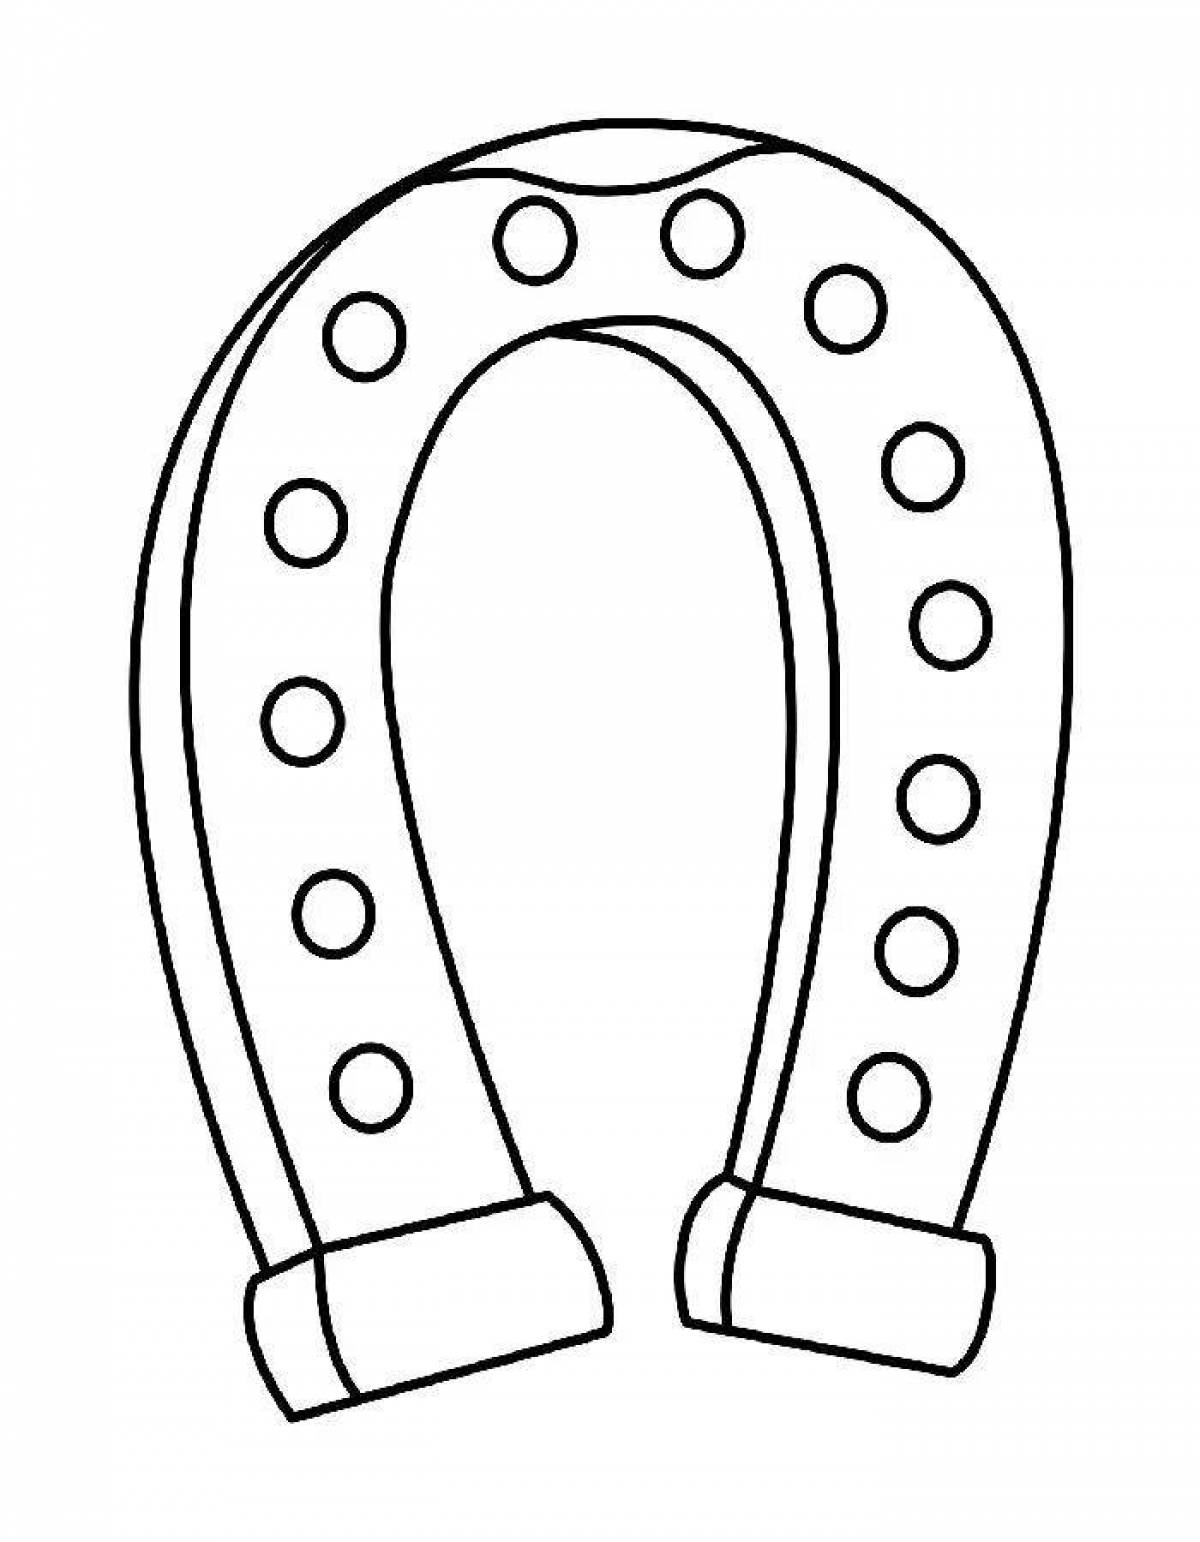 Detailed horseshoe coloring